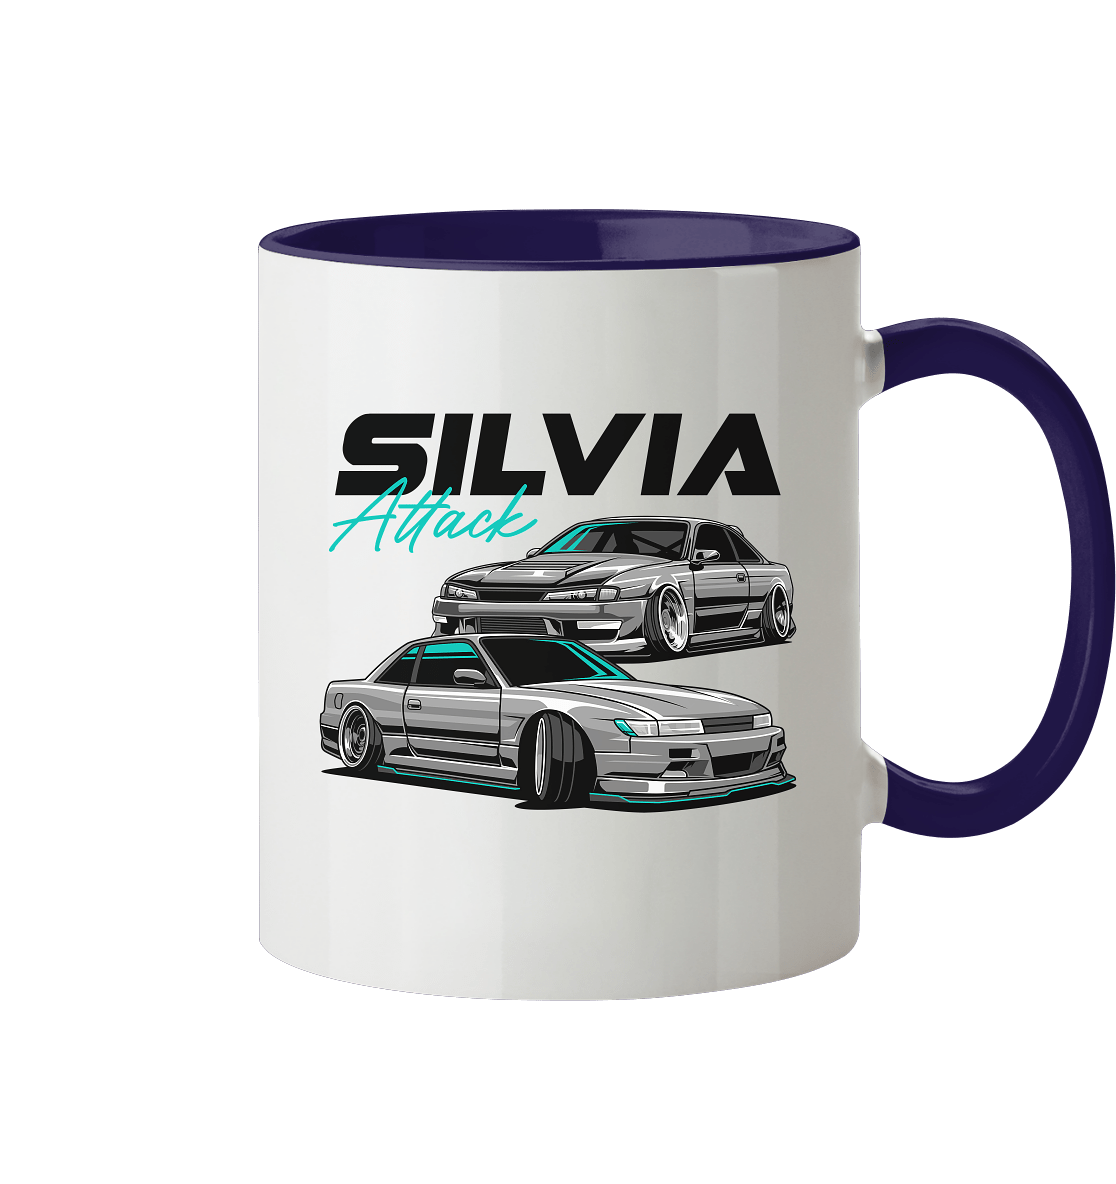 Silvia Attack - Tasse zweifarbig - MotoMerch.de